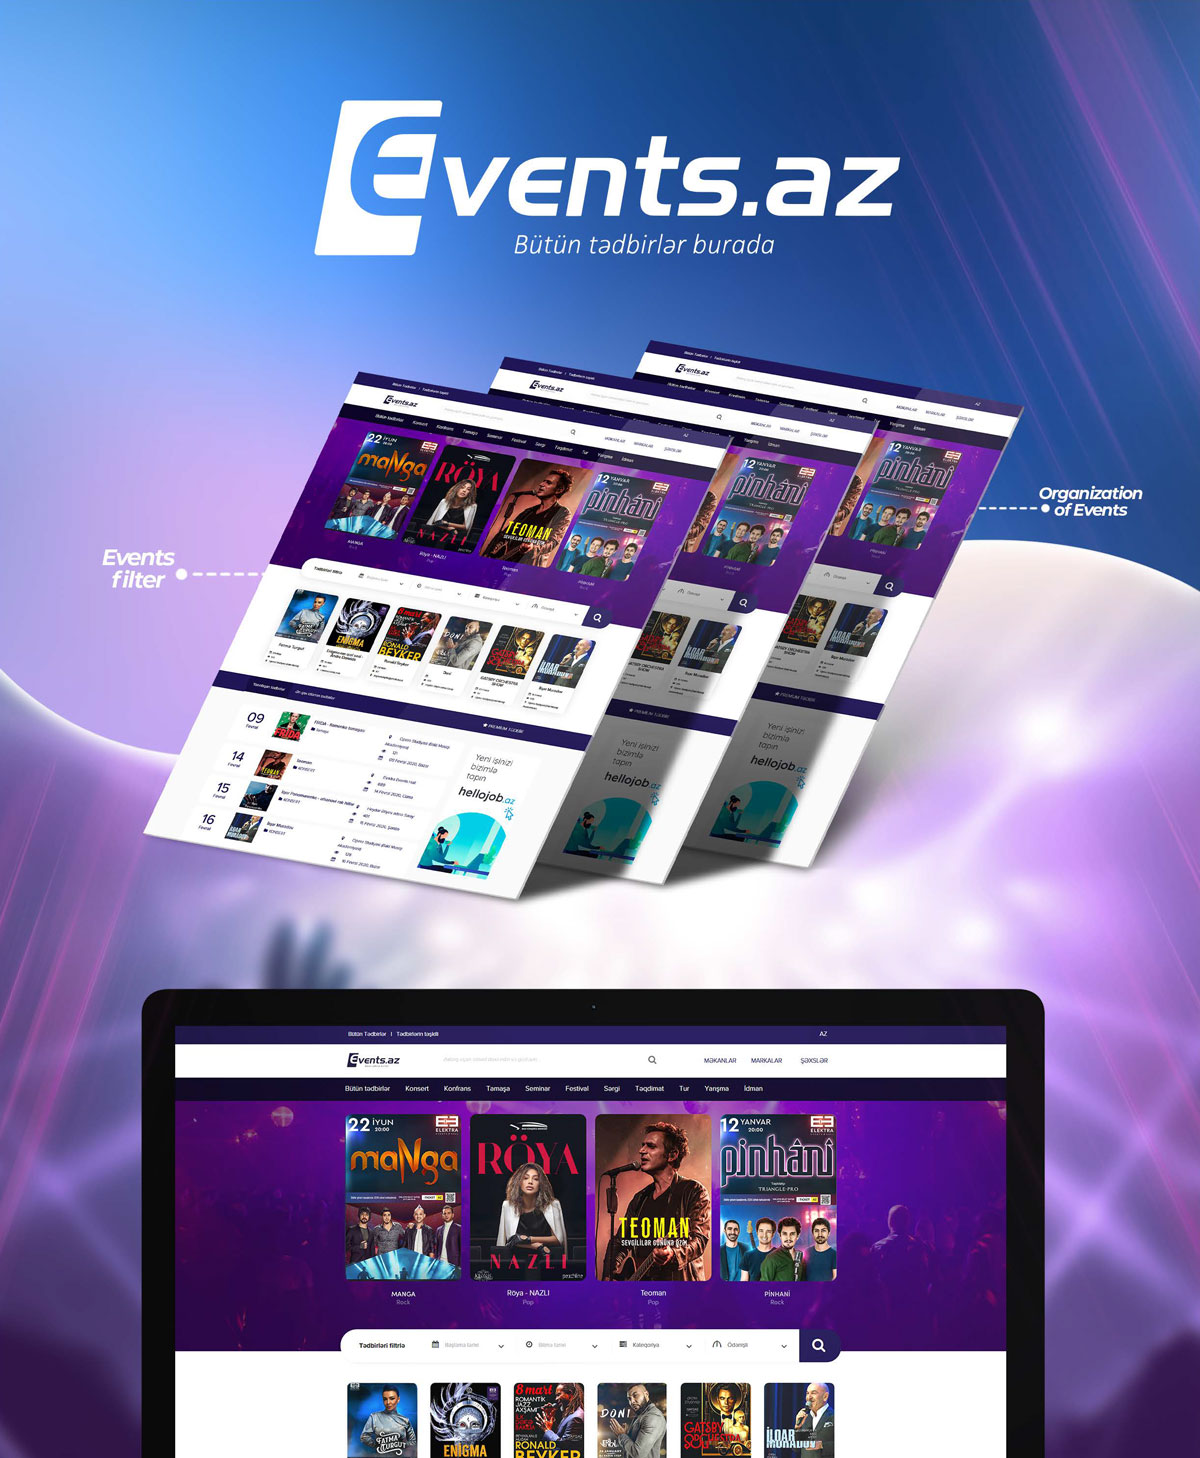 Events.az image - 1